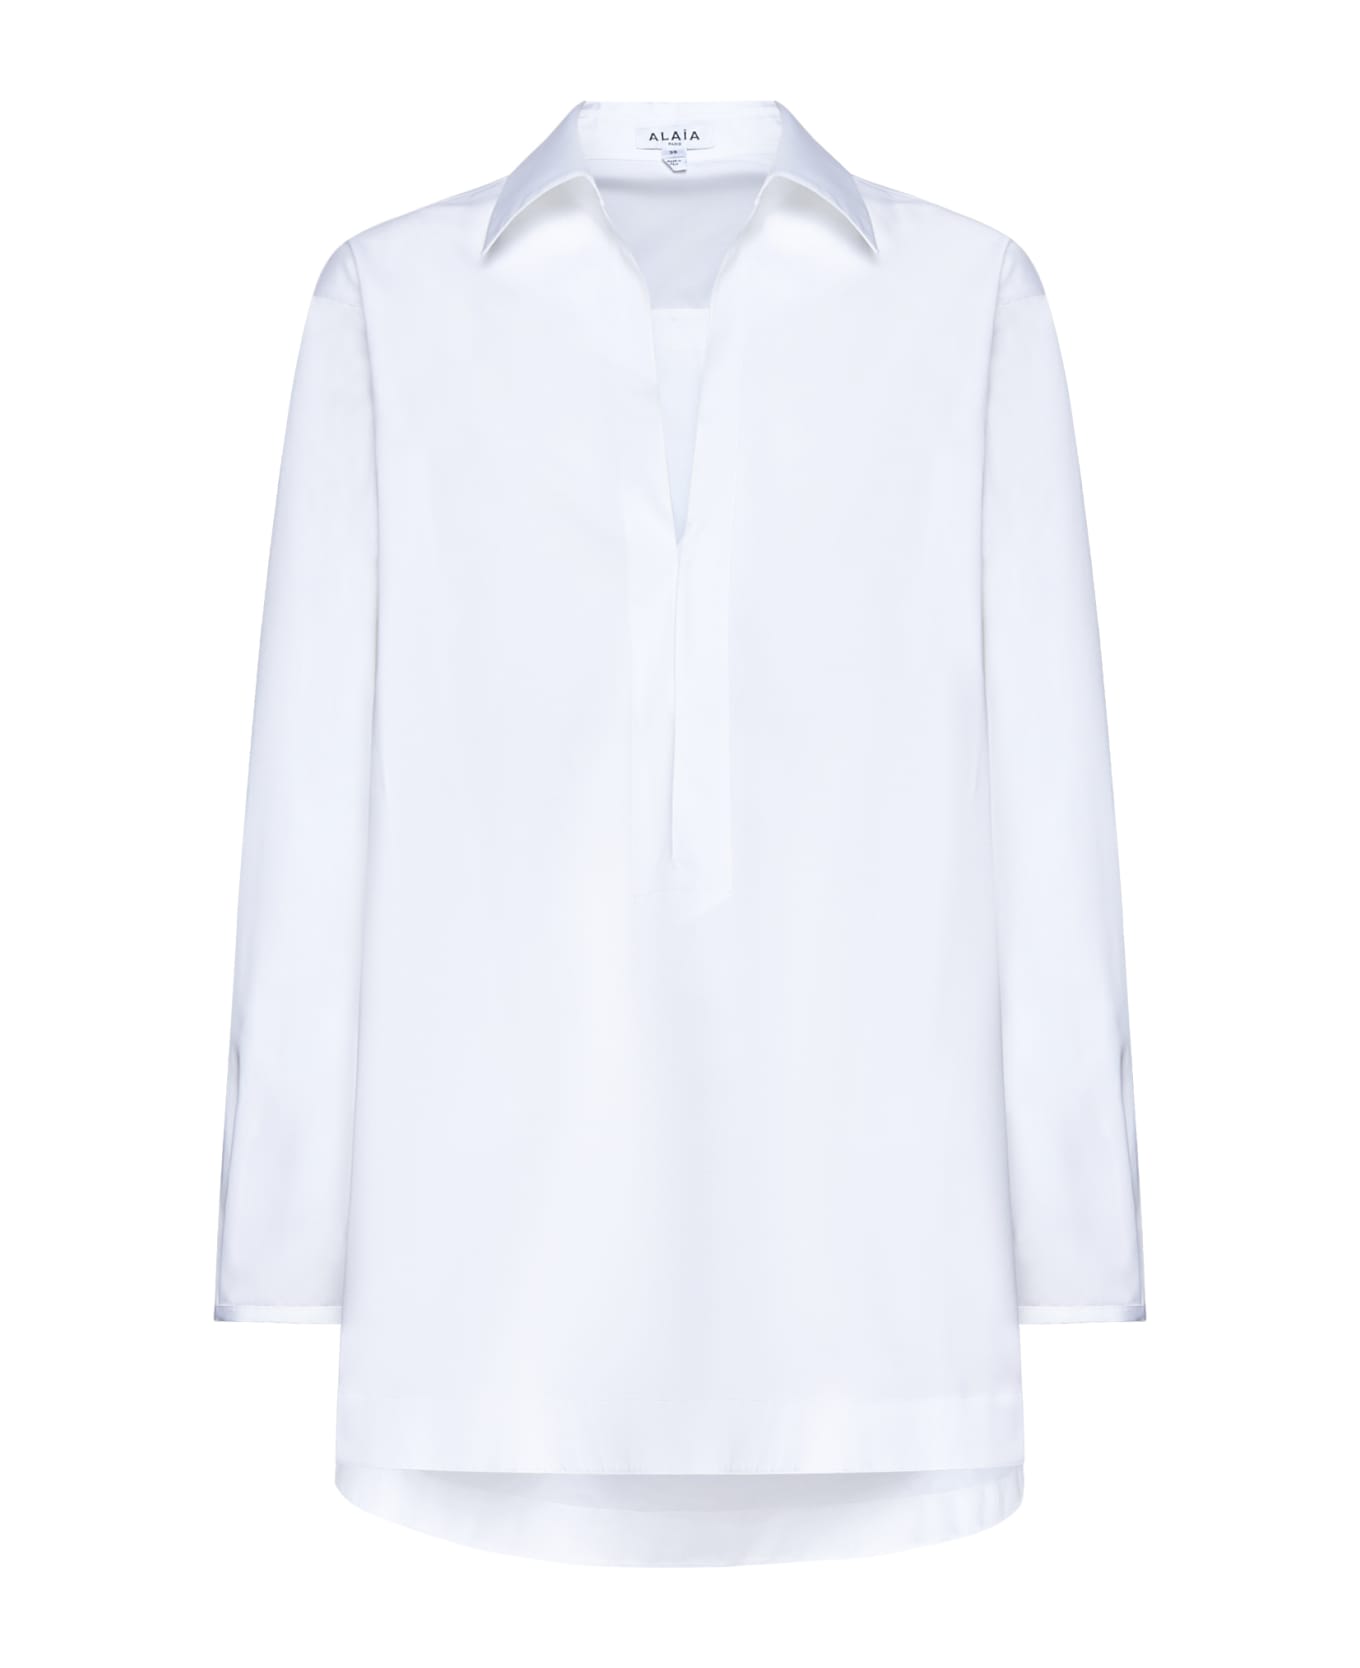 Alaia Shirt - White ブラウス